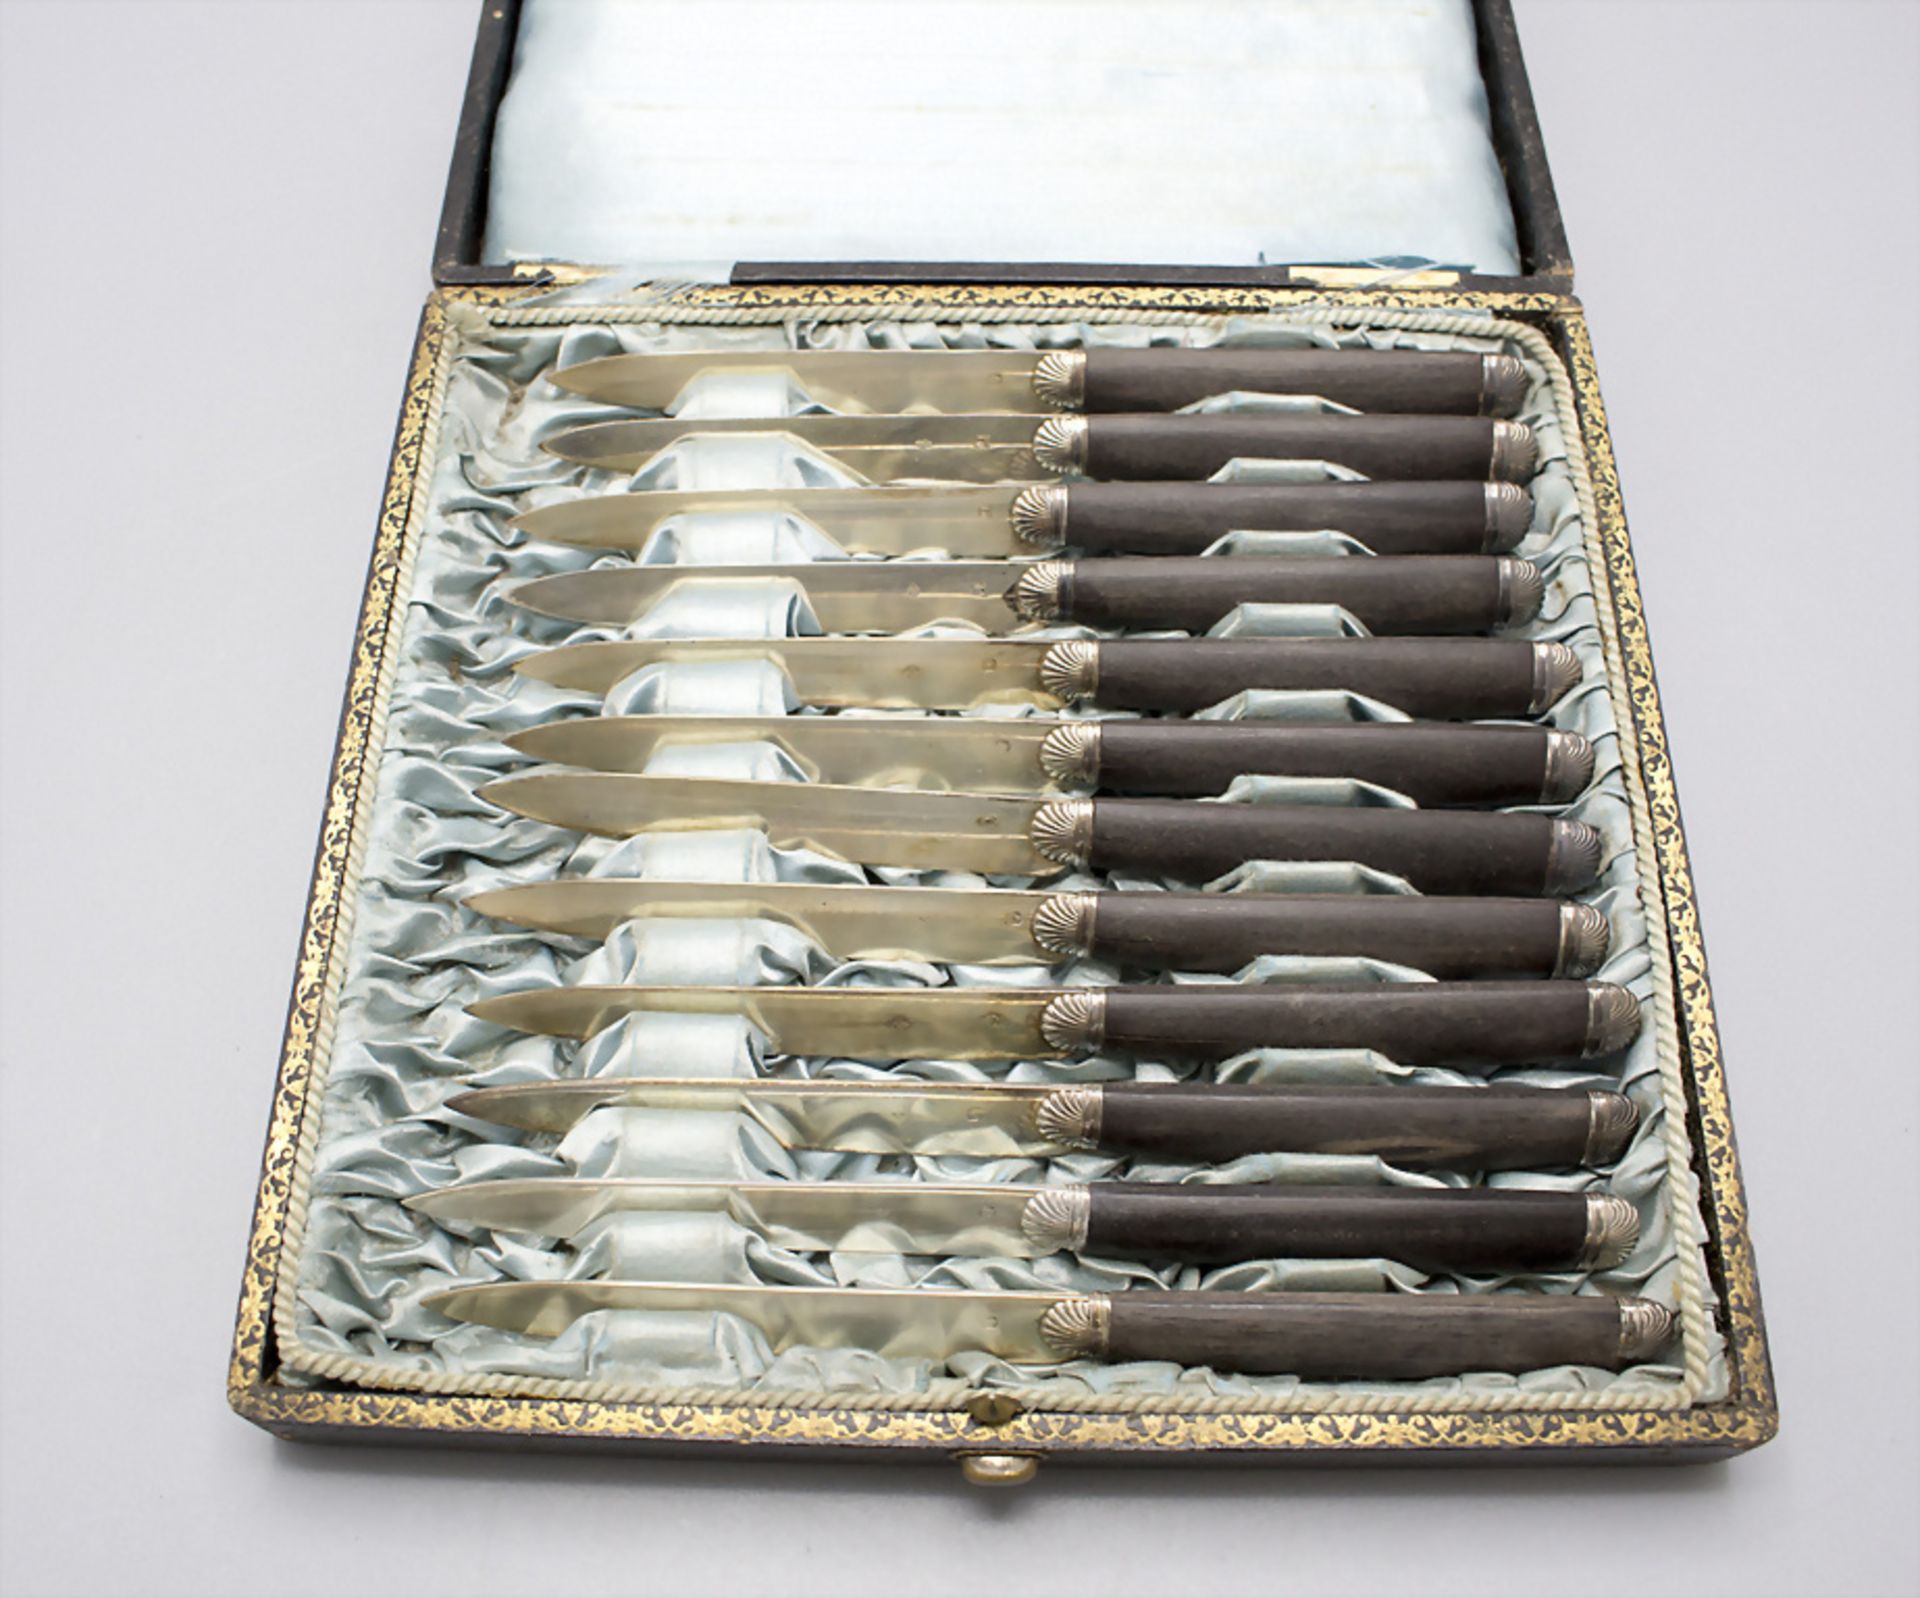 12 Messer mit Silberklingen / 12 knives with silver blades, Gustave Leroy & Cie., Paris, 1896/1897 - Image 2 of 5